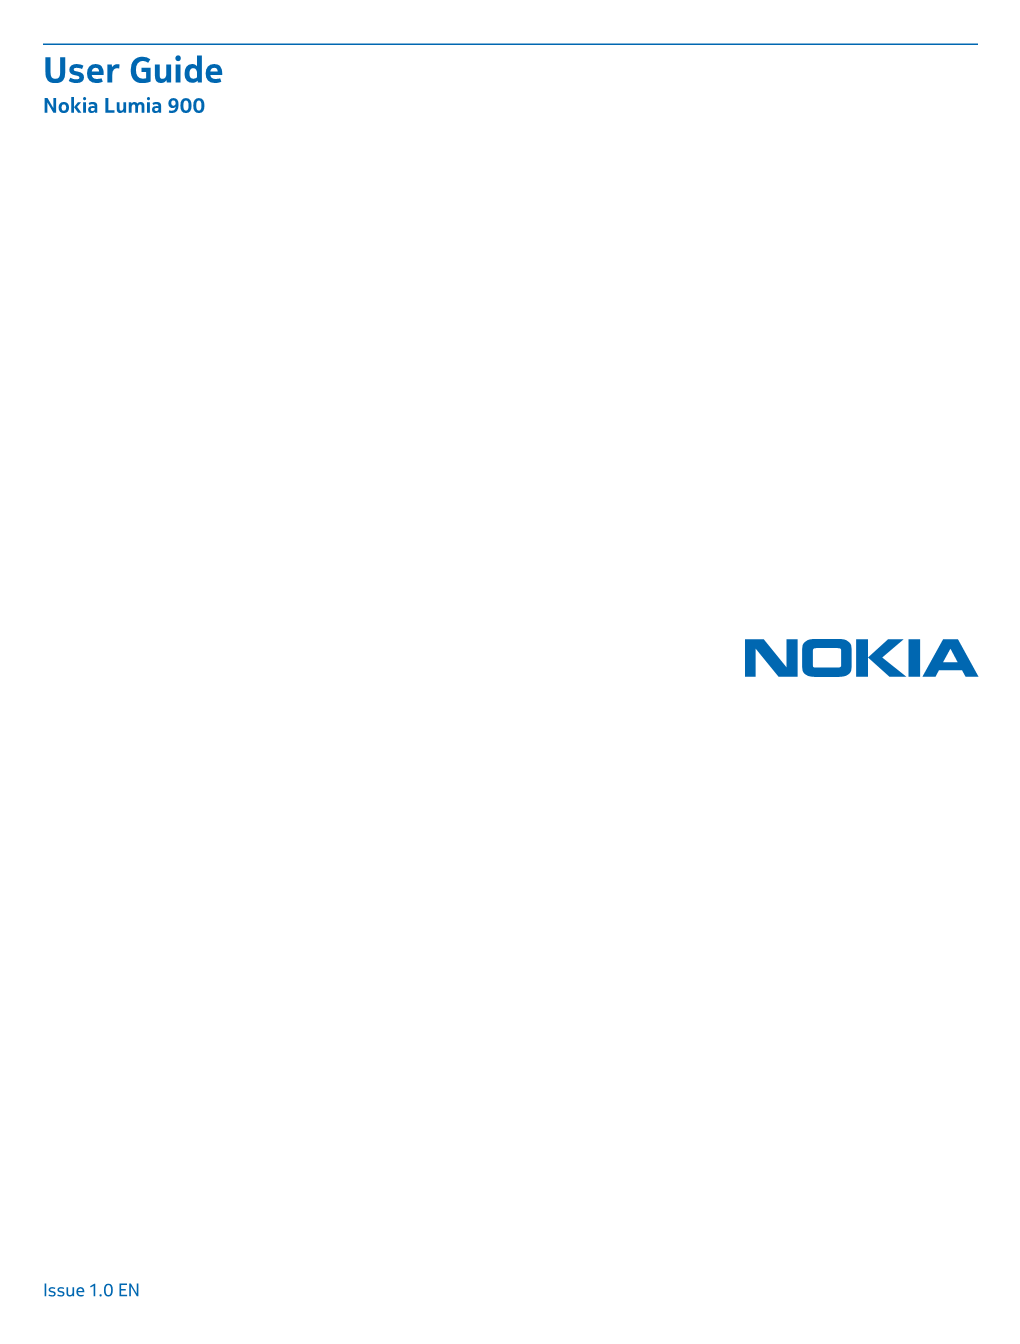 User Guide Nokia Lumia 900